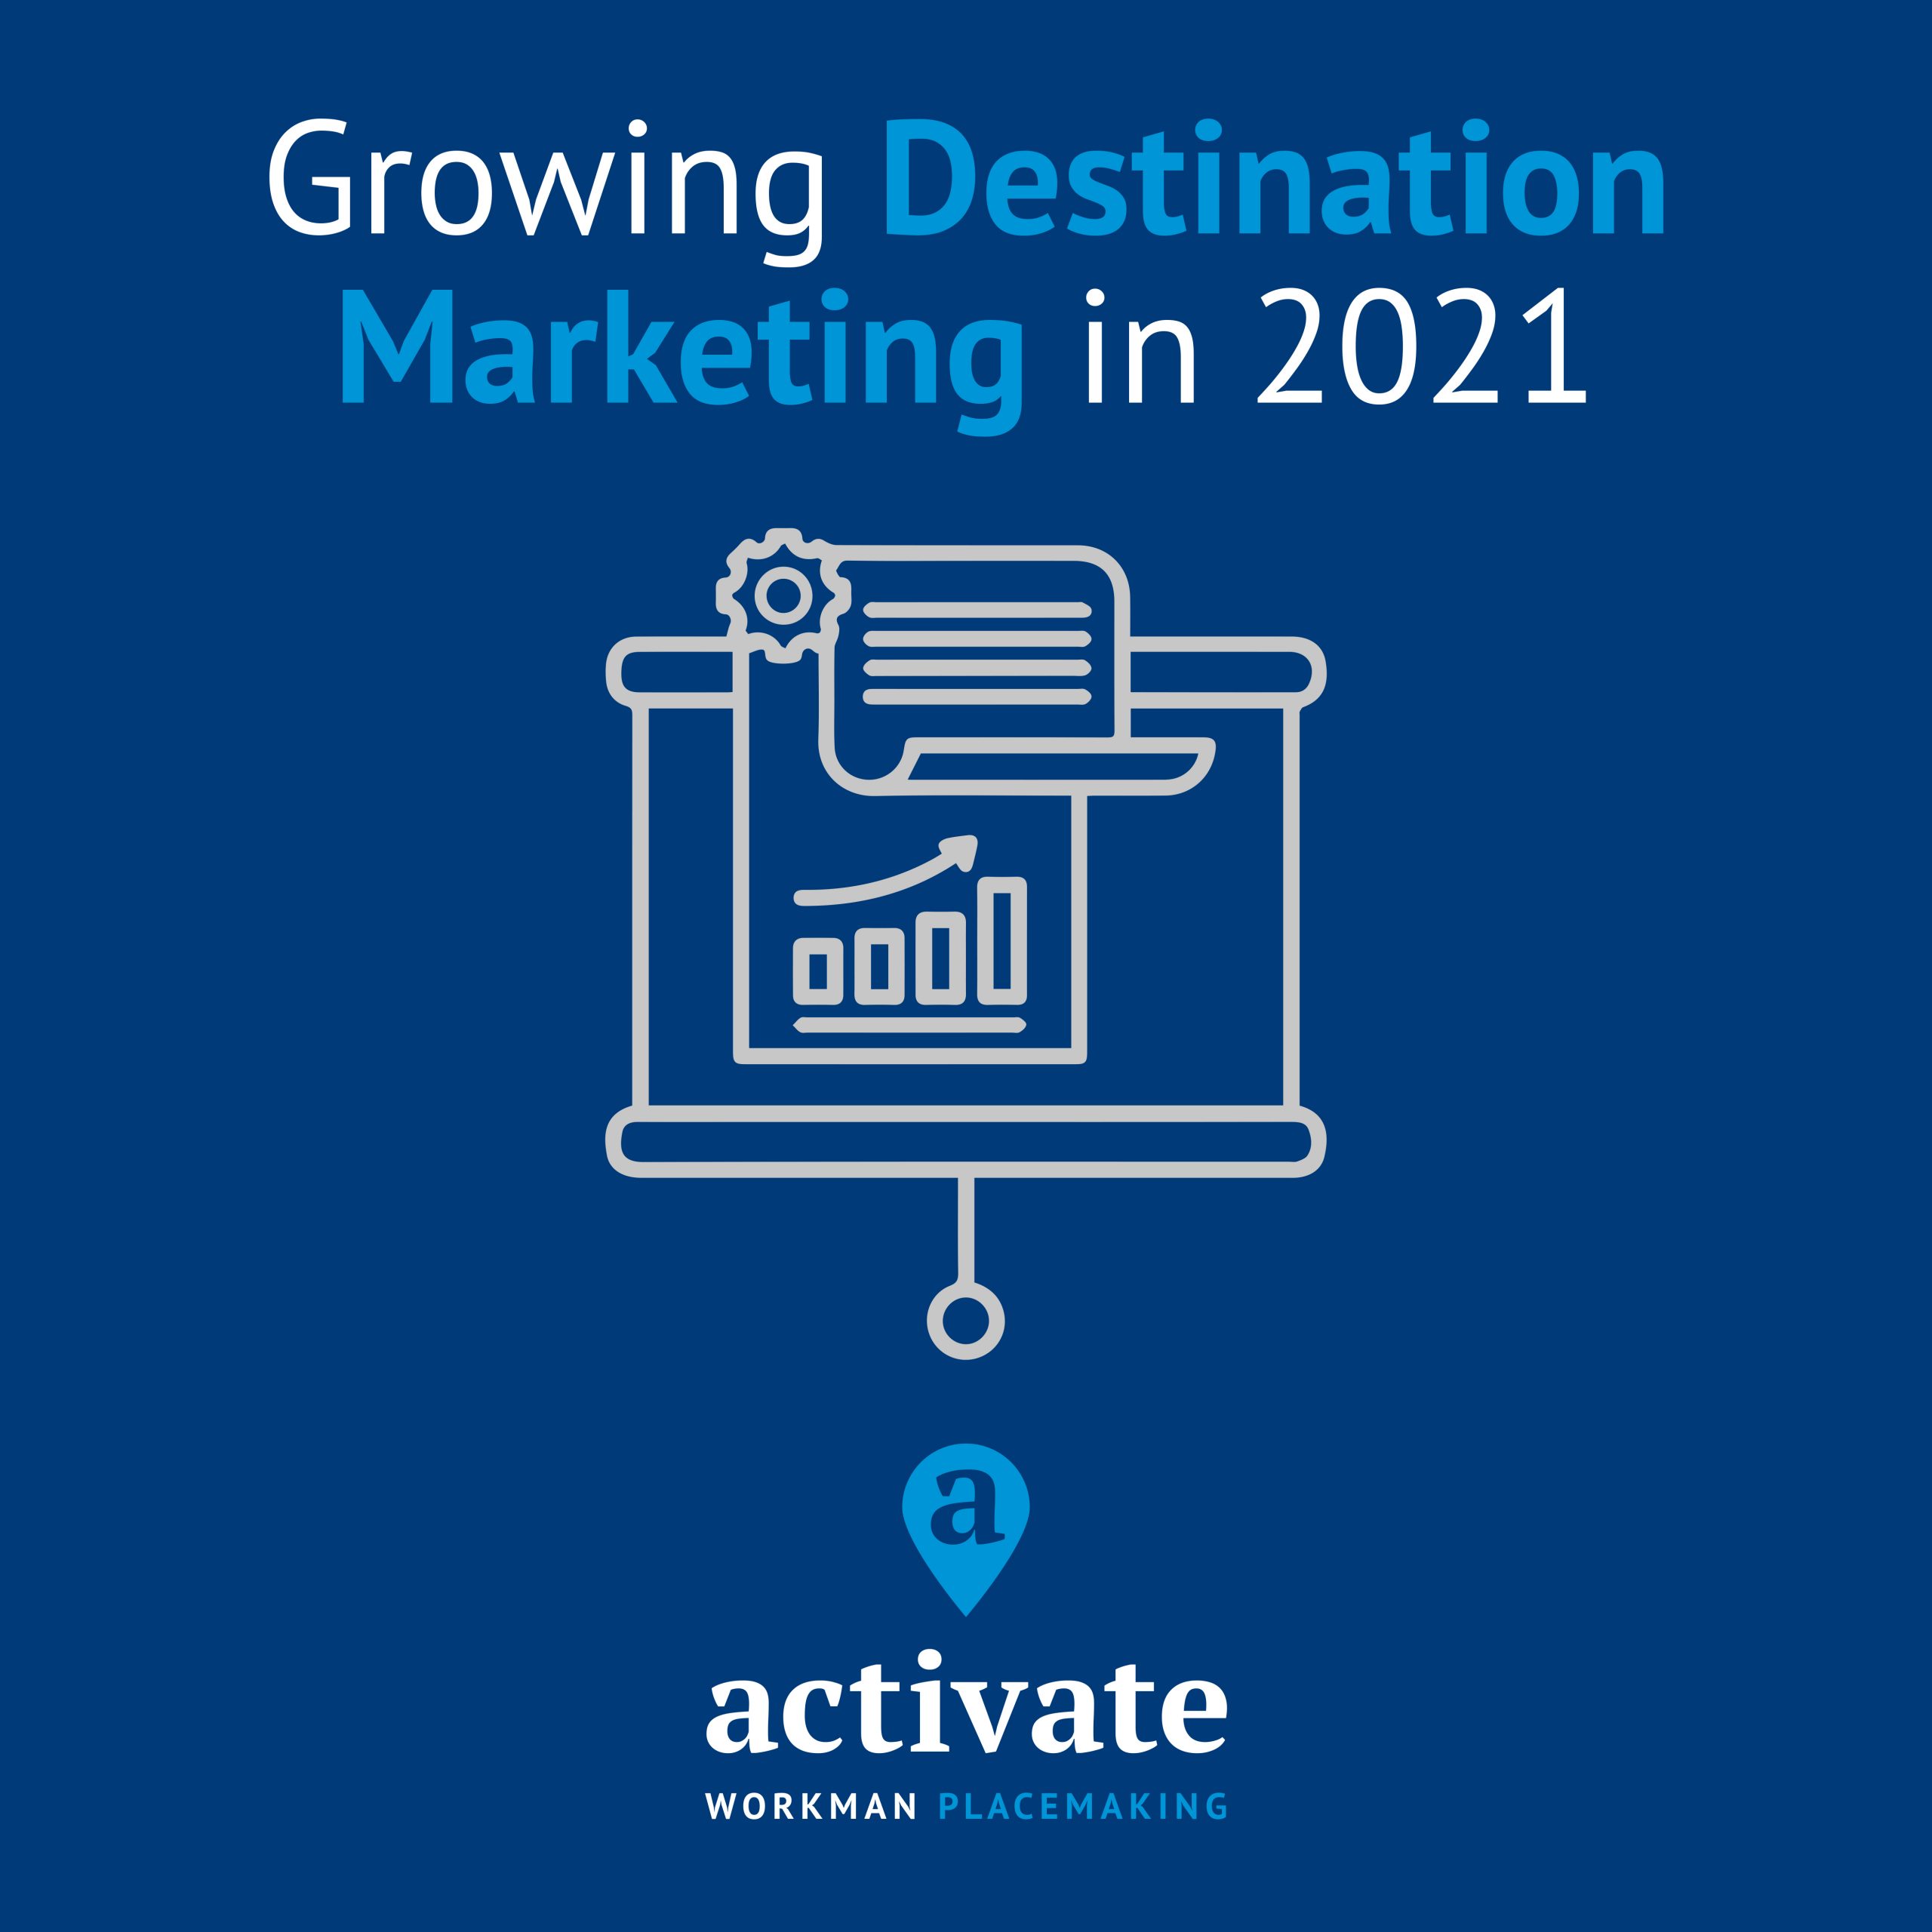 Growing Destination Marketing in 2021